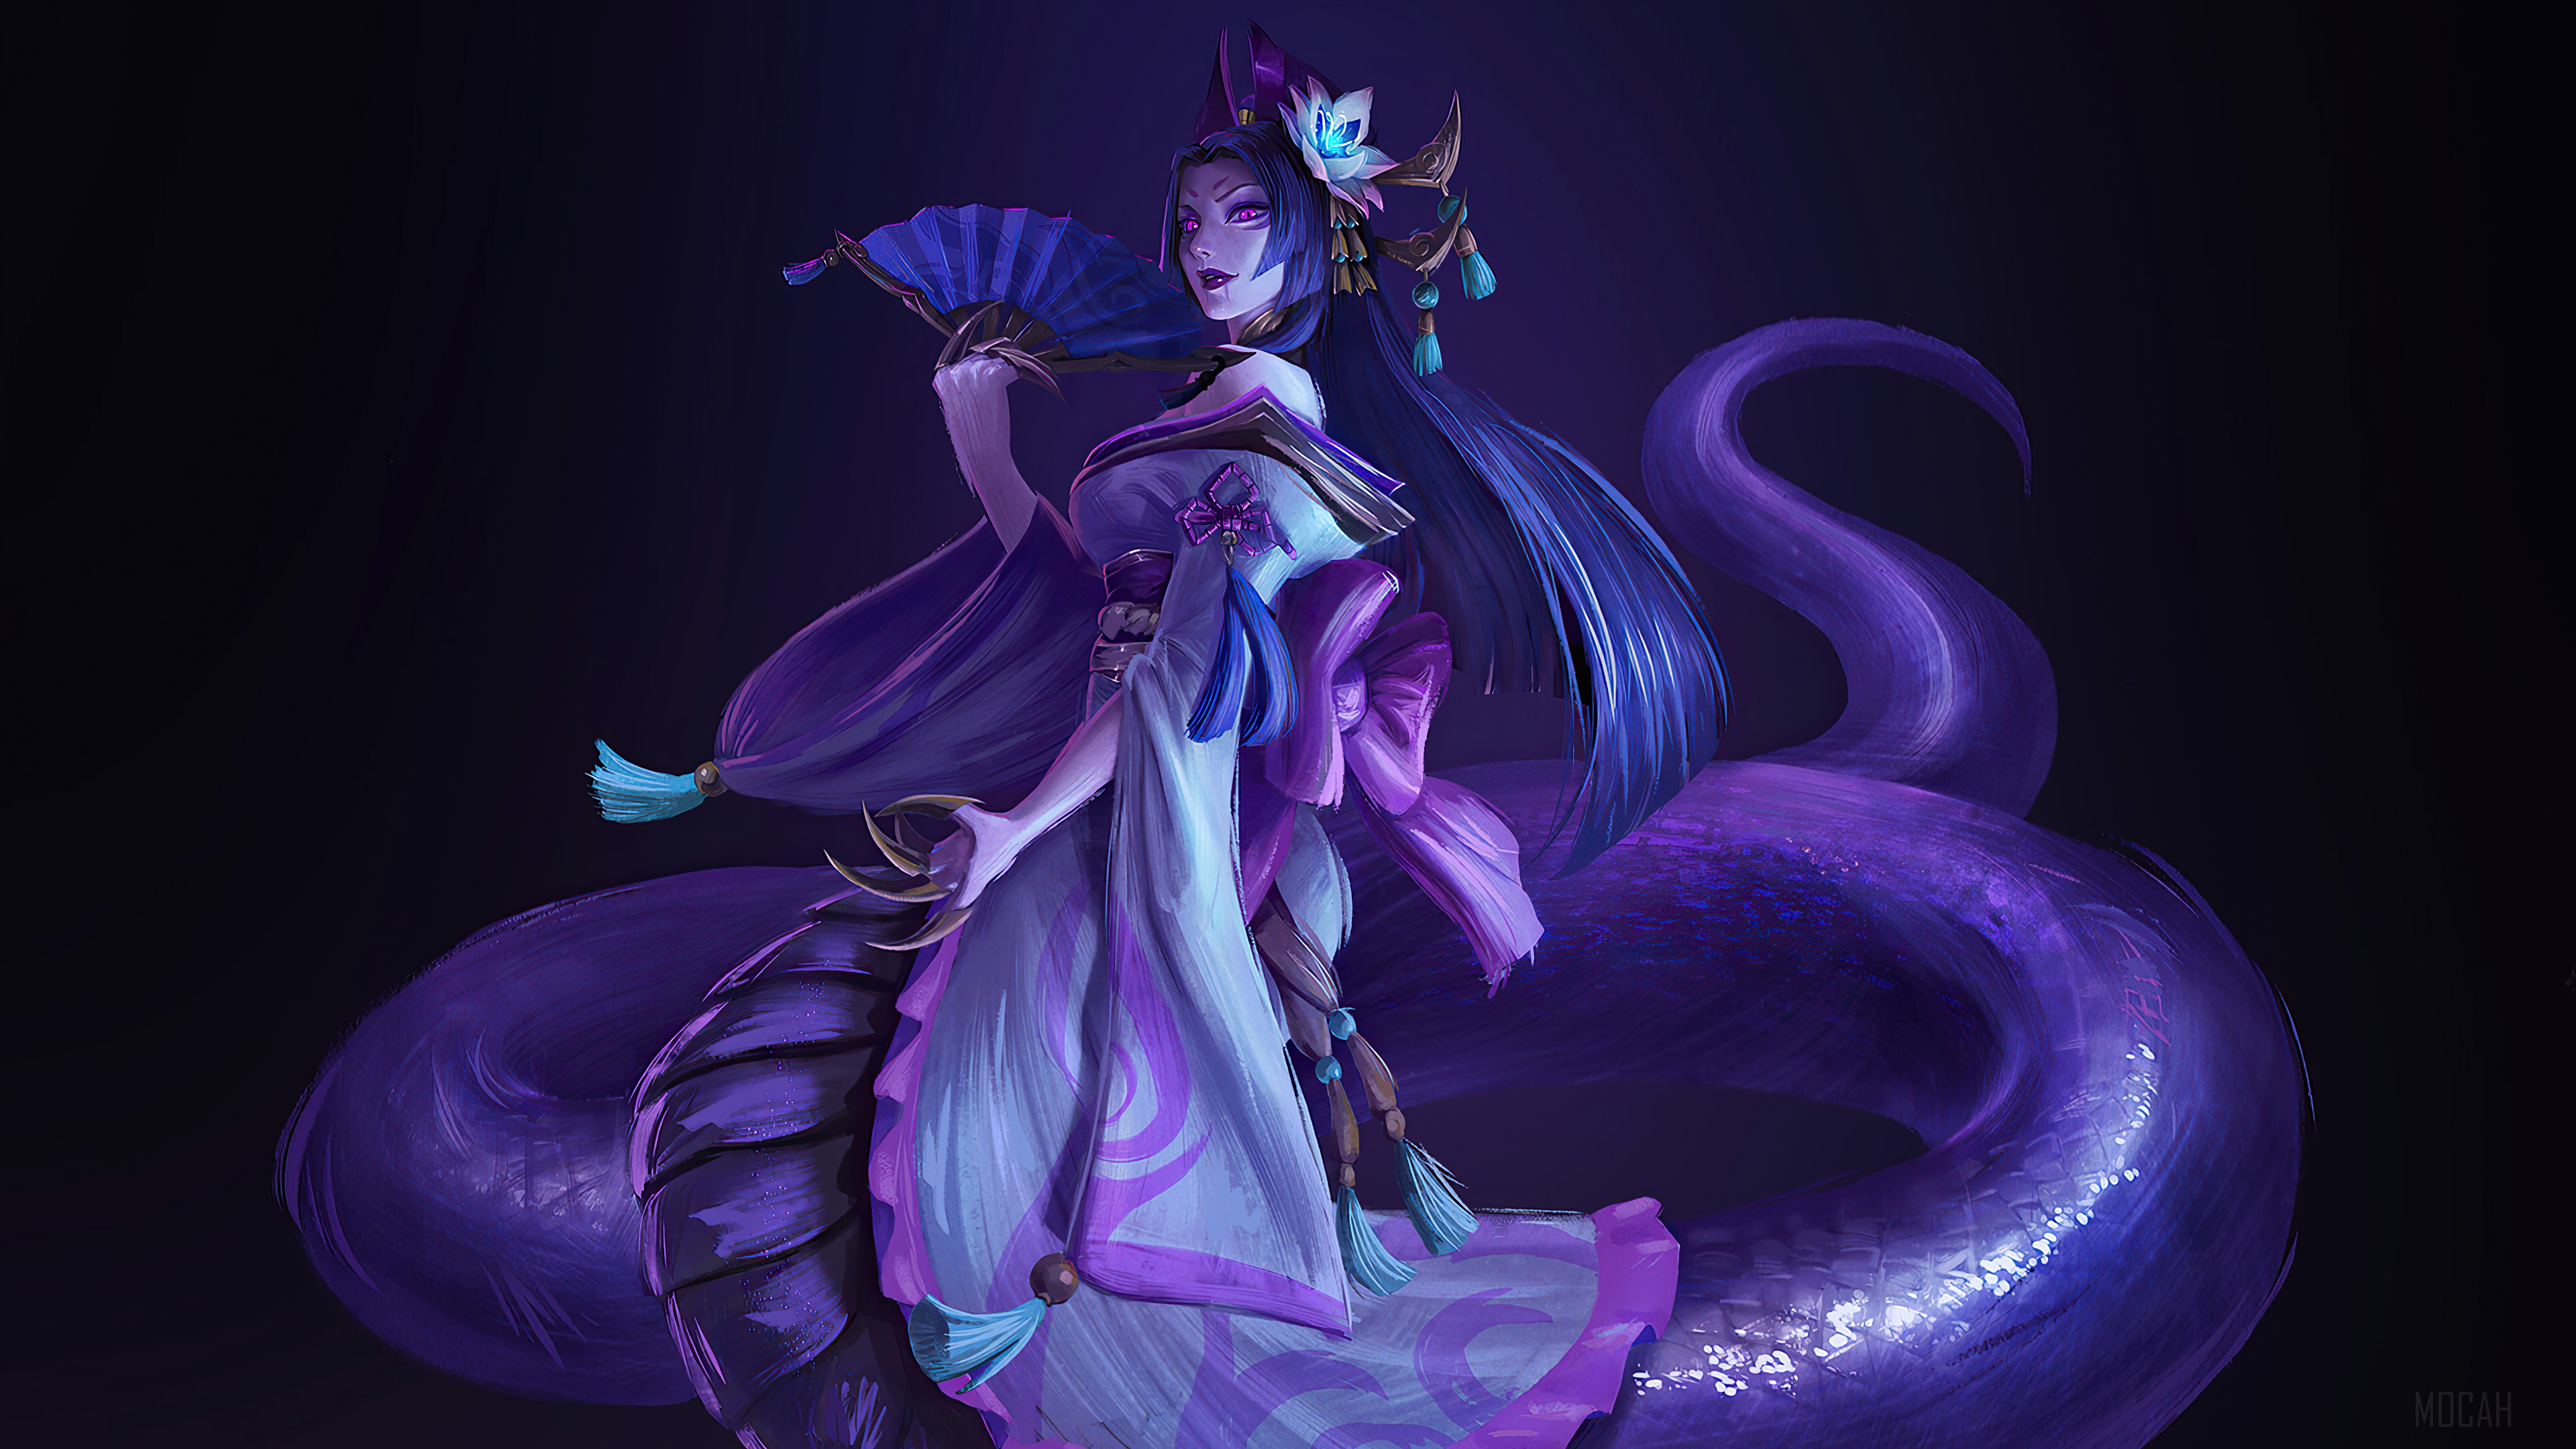 General 3840x2160 snake League of Legends purple background purple dress Cassiopeia (League of Legends)